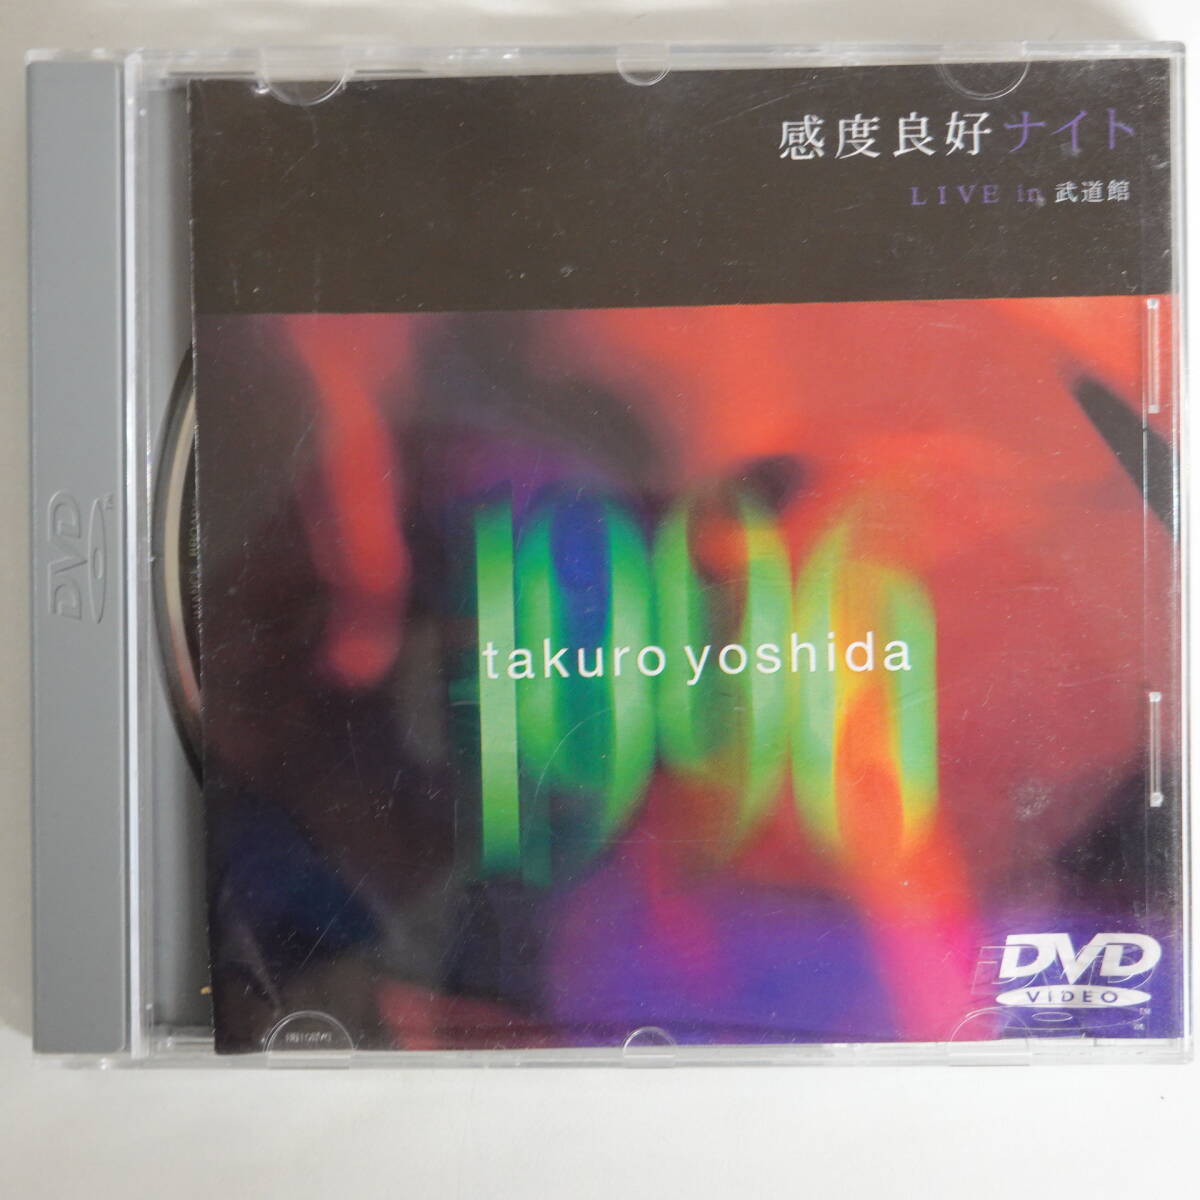 0621 Yoshida Takuro (.......)DVD чувствительность хороший Night LIVE in будо павильон 